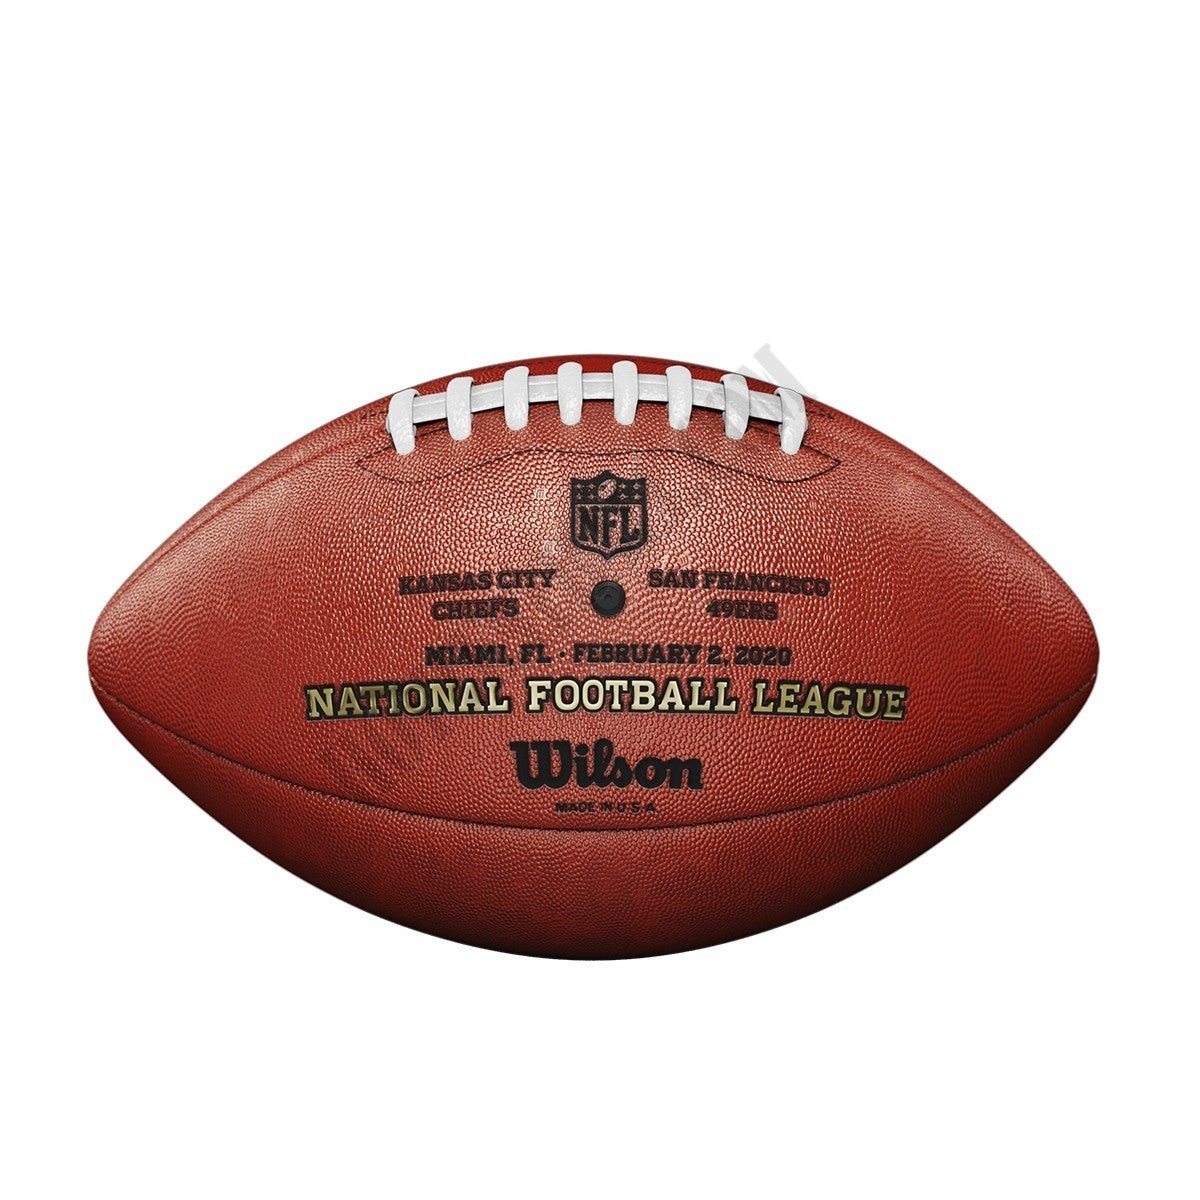 Super Bowl LIV Game Football - Kansas City Chiefs - Wilson Discount Store - -1